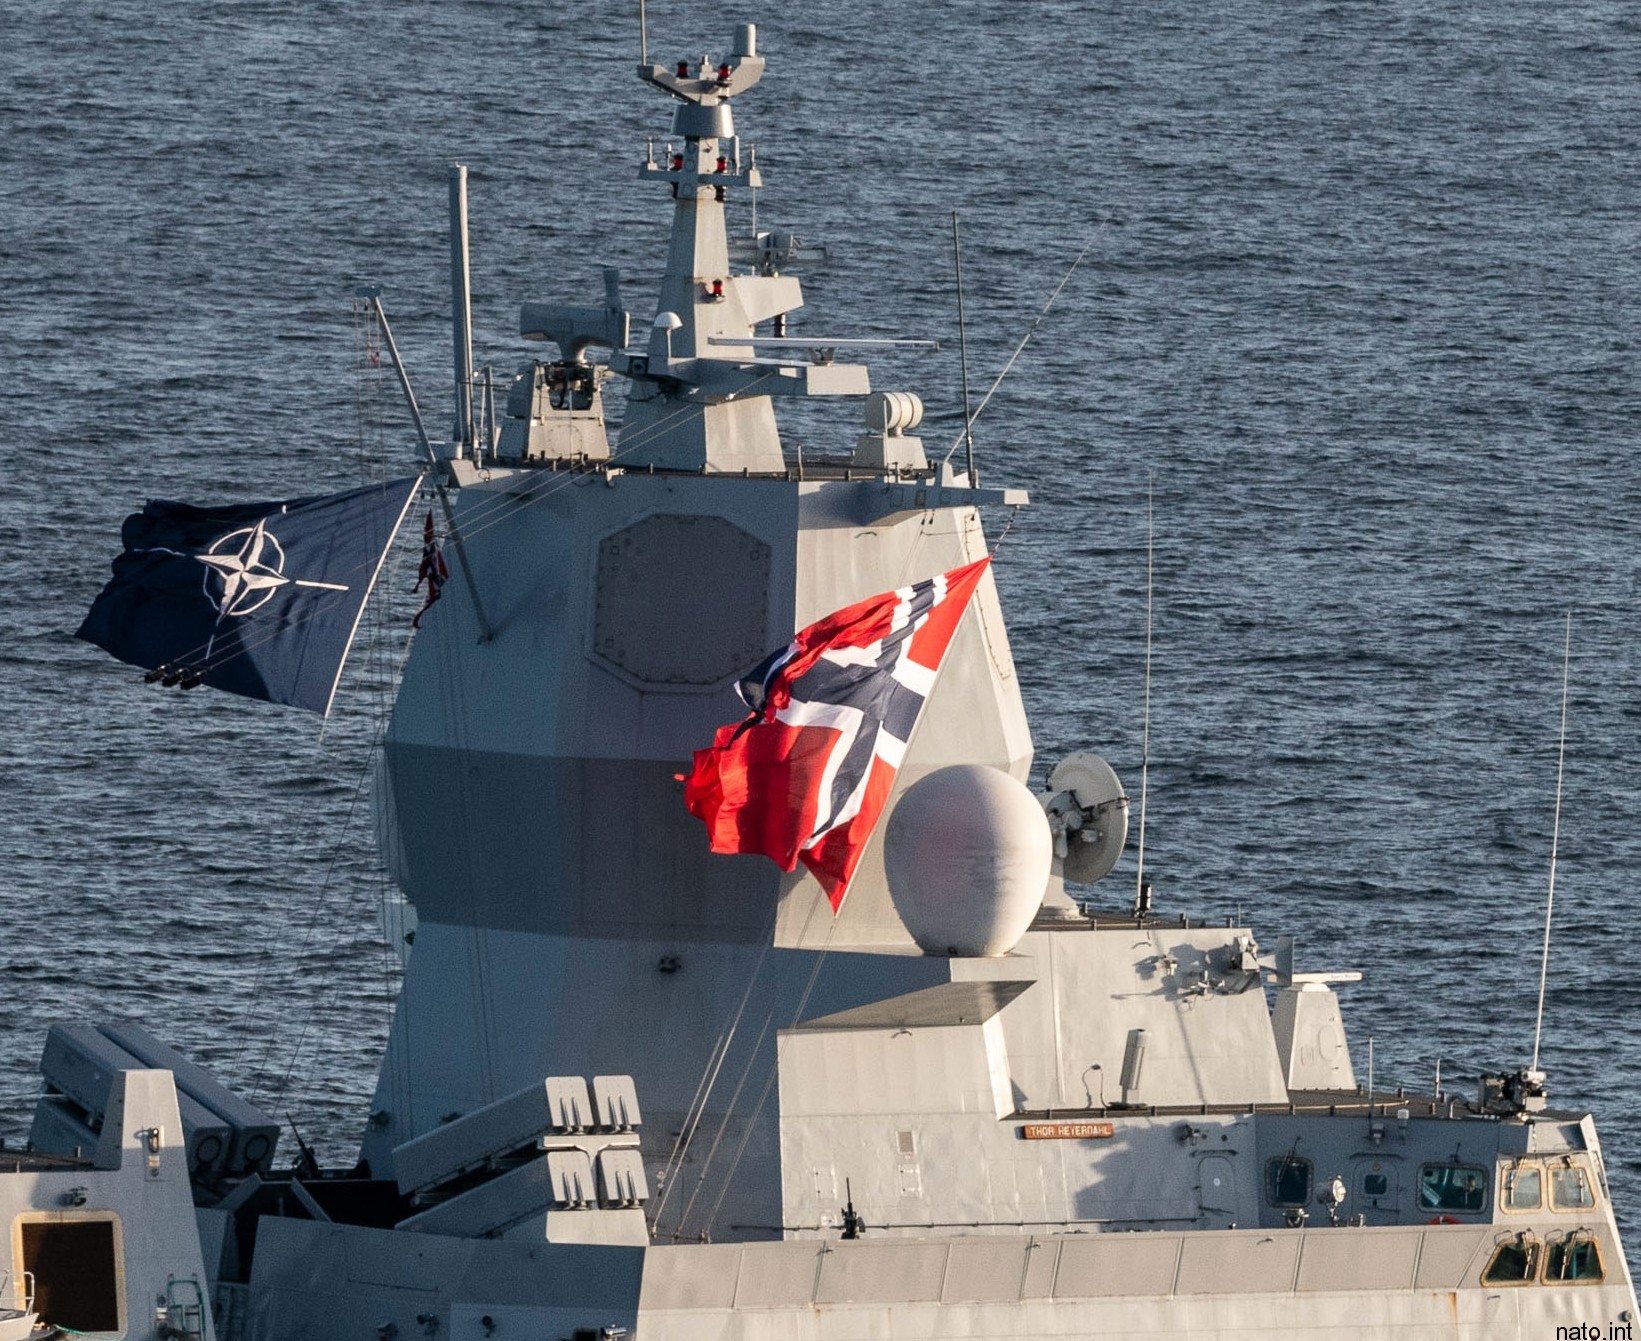 kds naval strike missile joint nsm kongsberg defence systems raytheon norway 12 norwegian nansen class frigate